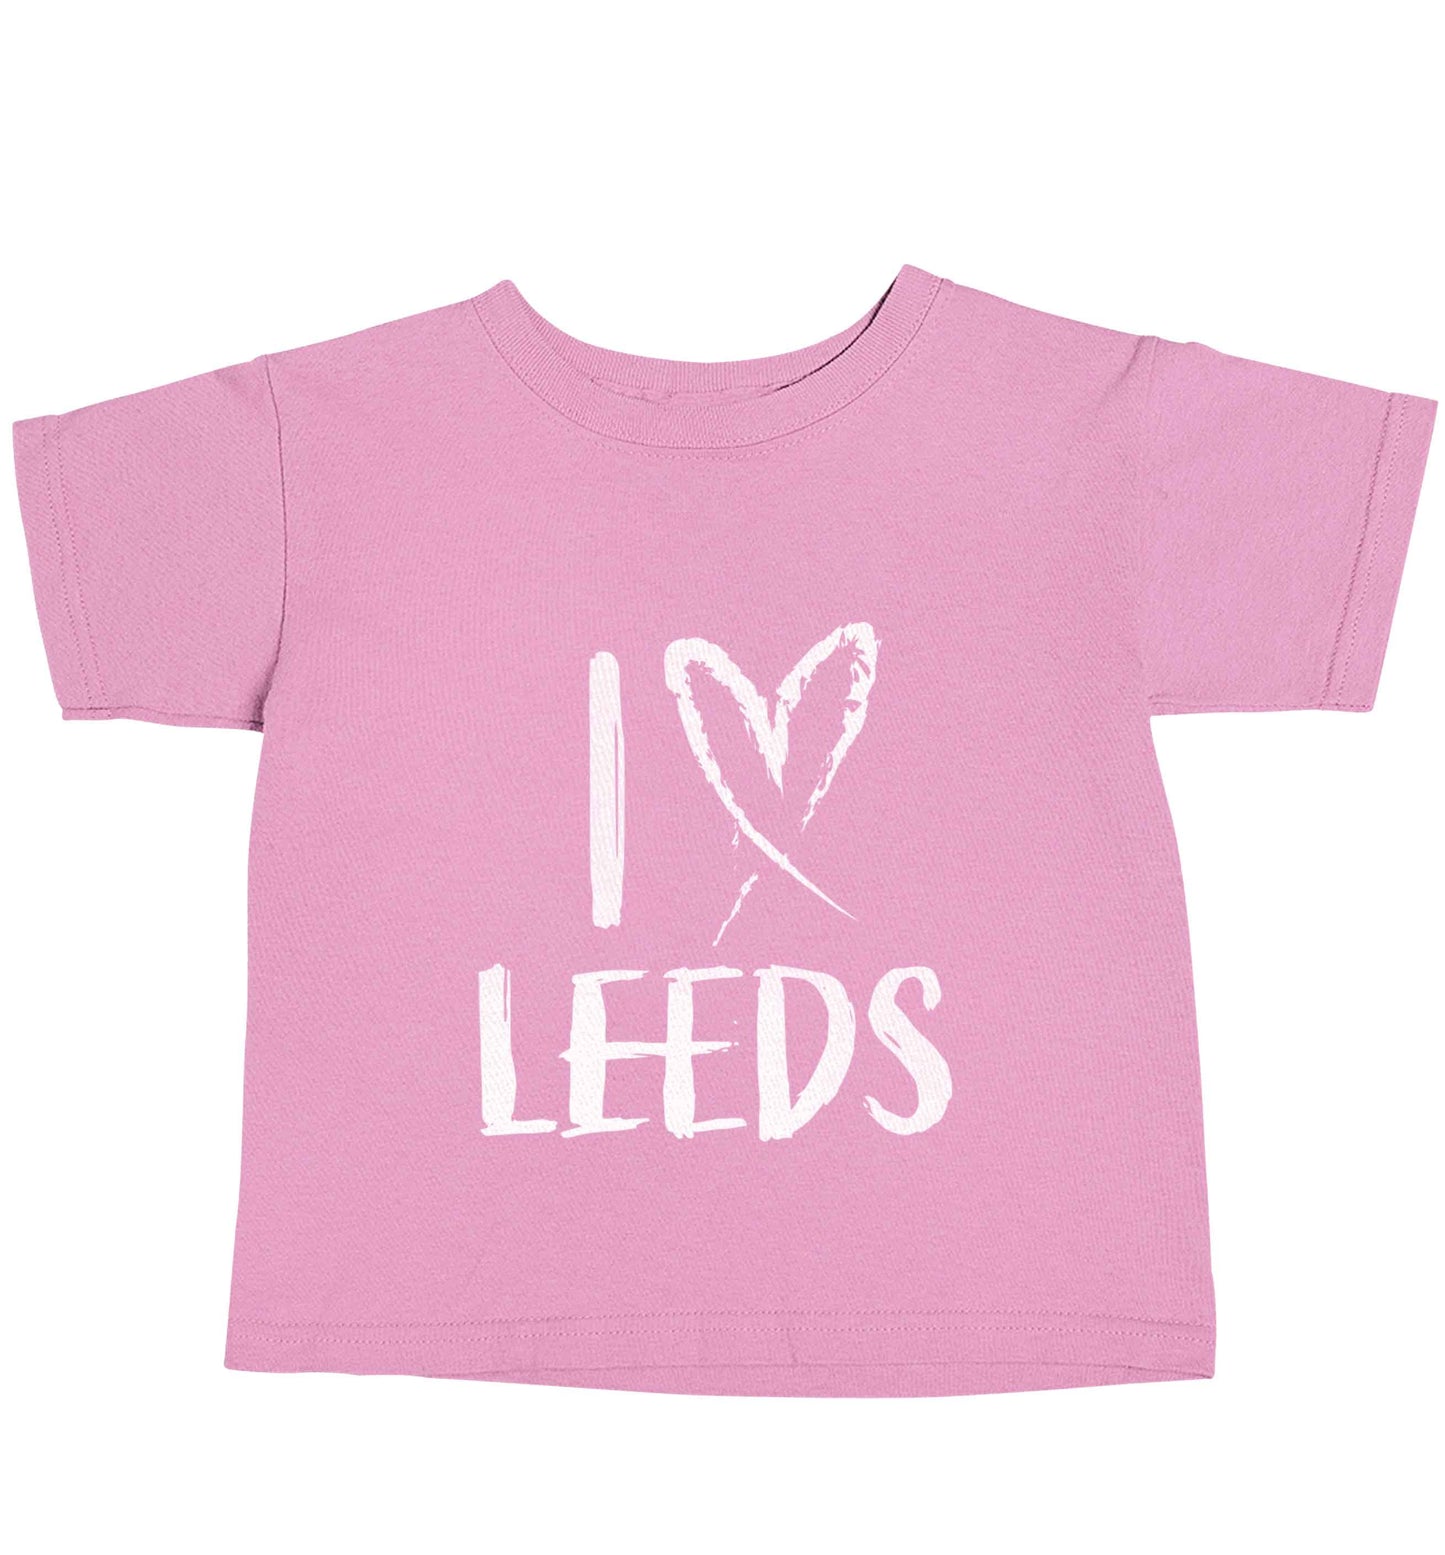 I love Leeds light pink baby toddler Tshirt 2 Years